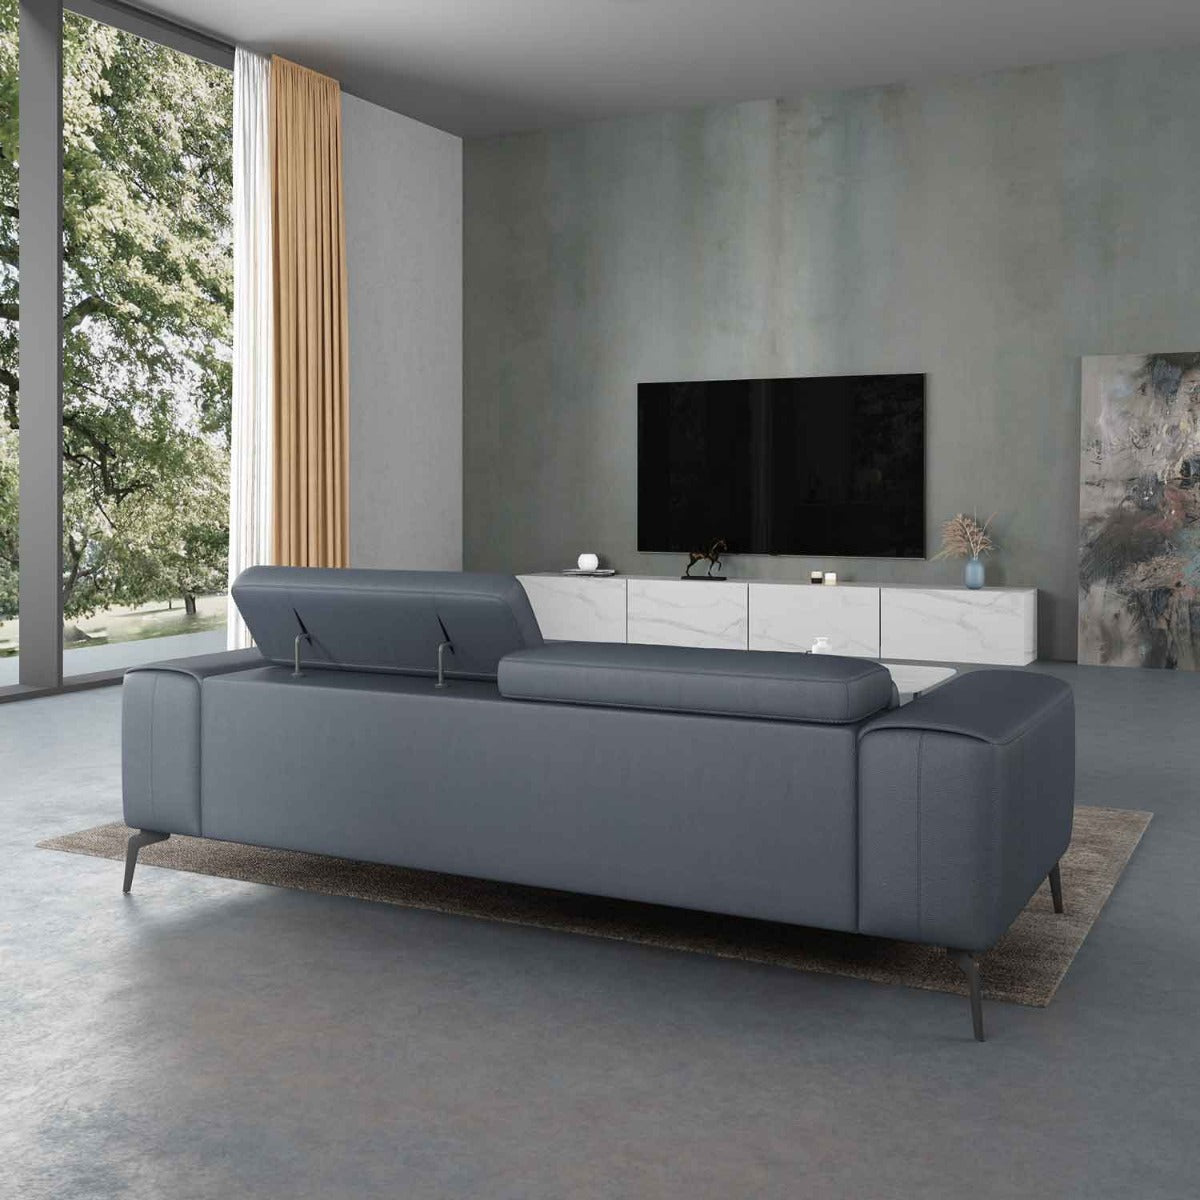 European Furniture - Cavour 3 Piece Living Room Set in Smokey Gray - 12550-3SET - New Star Living